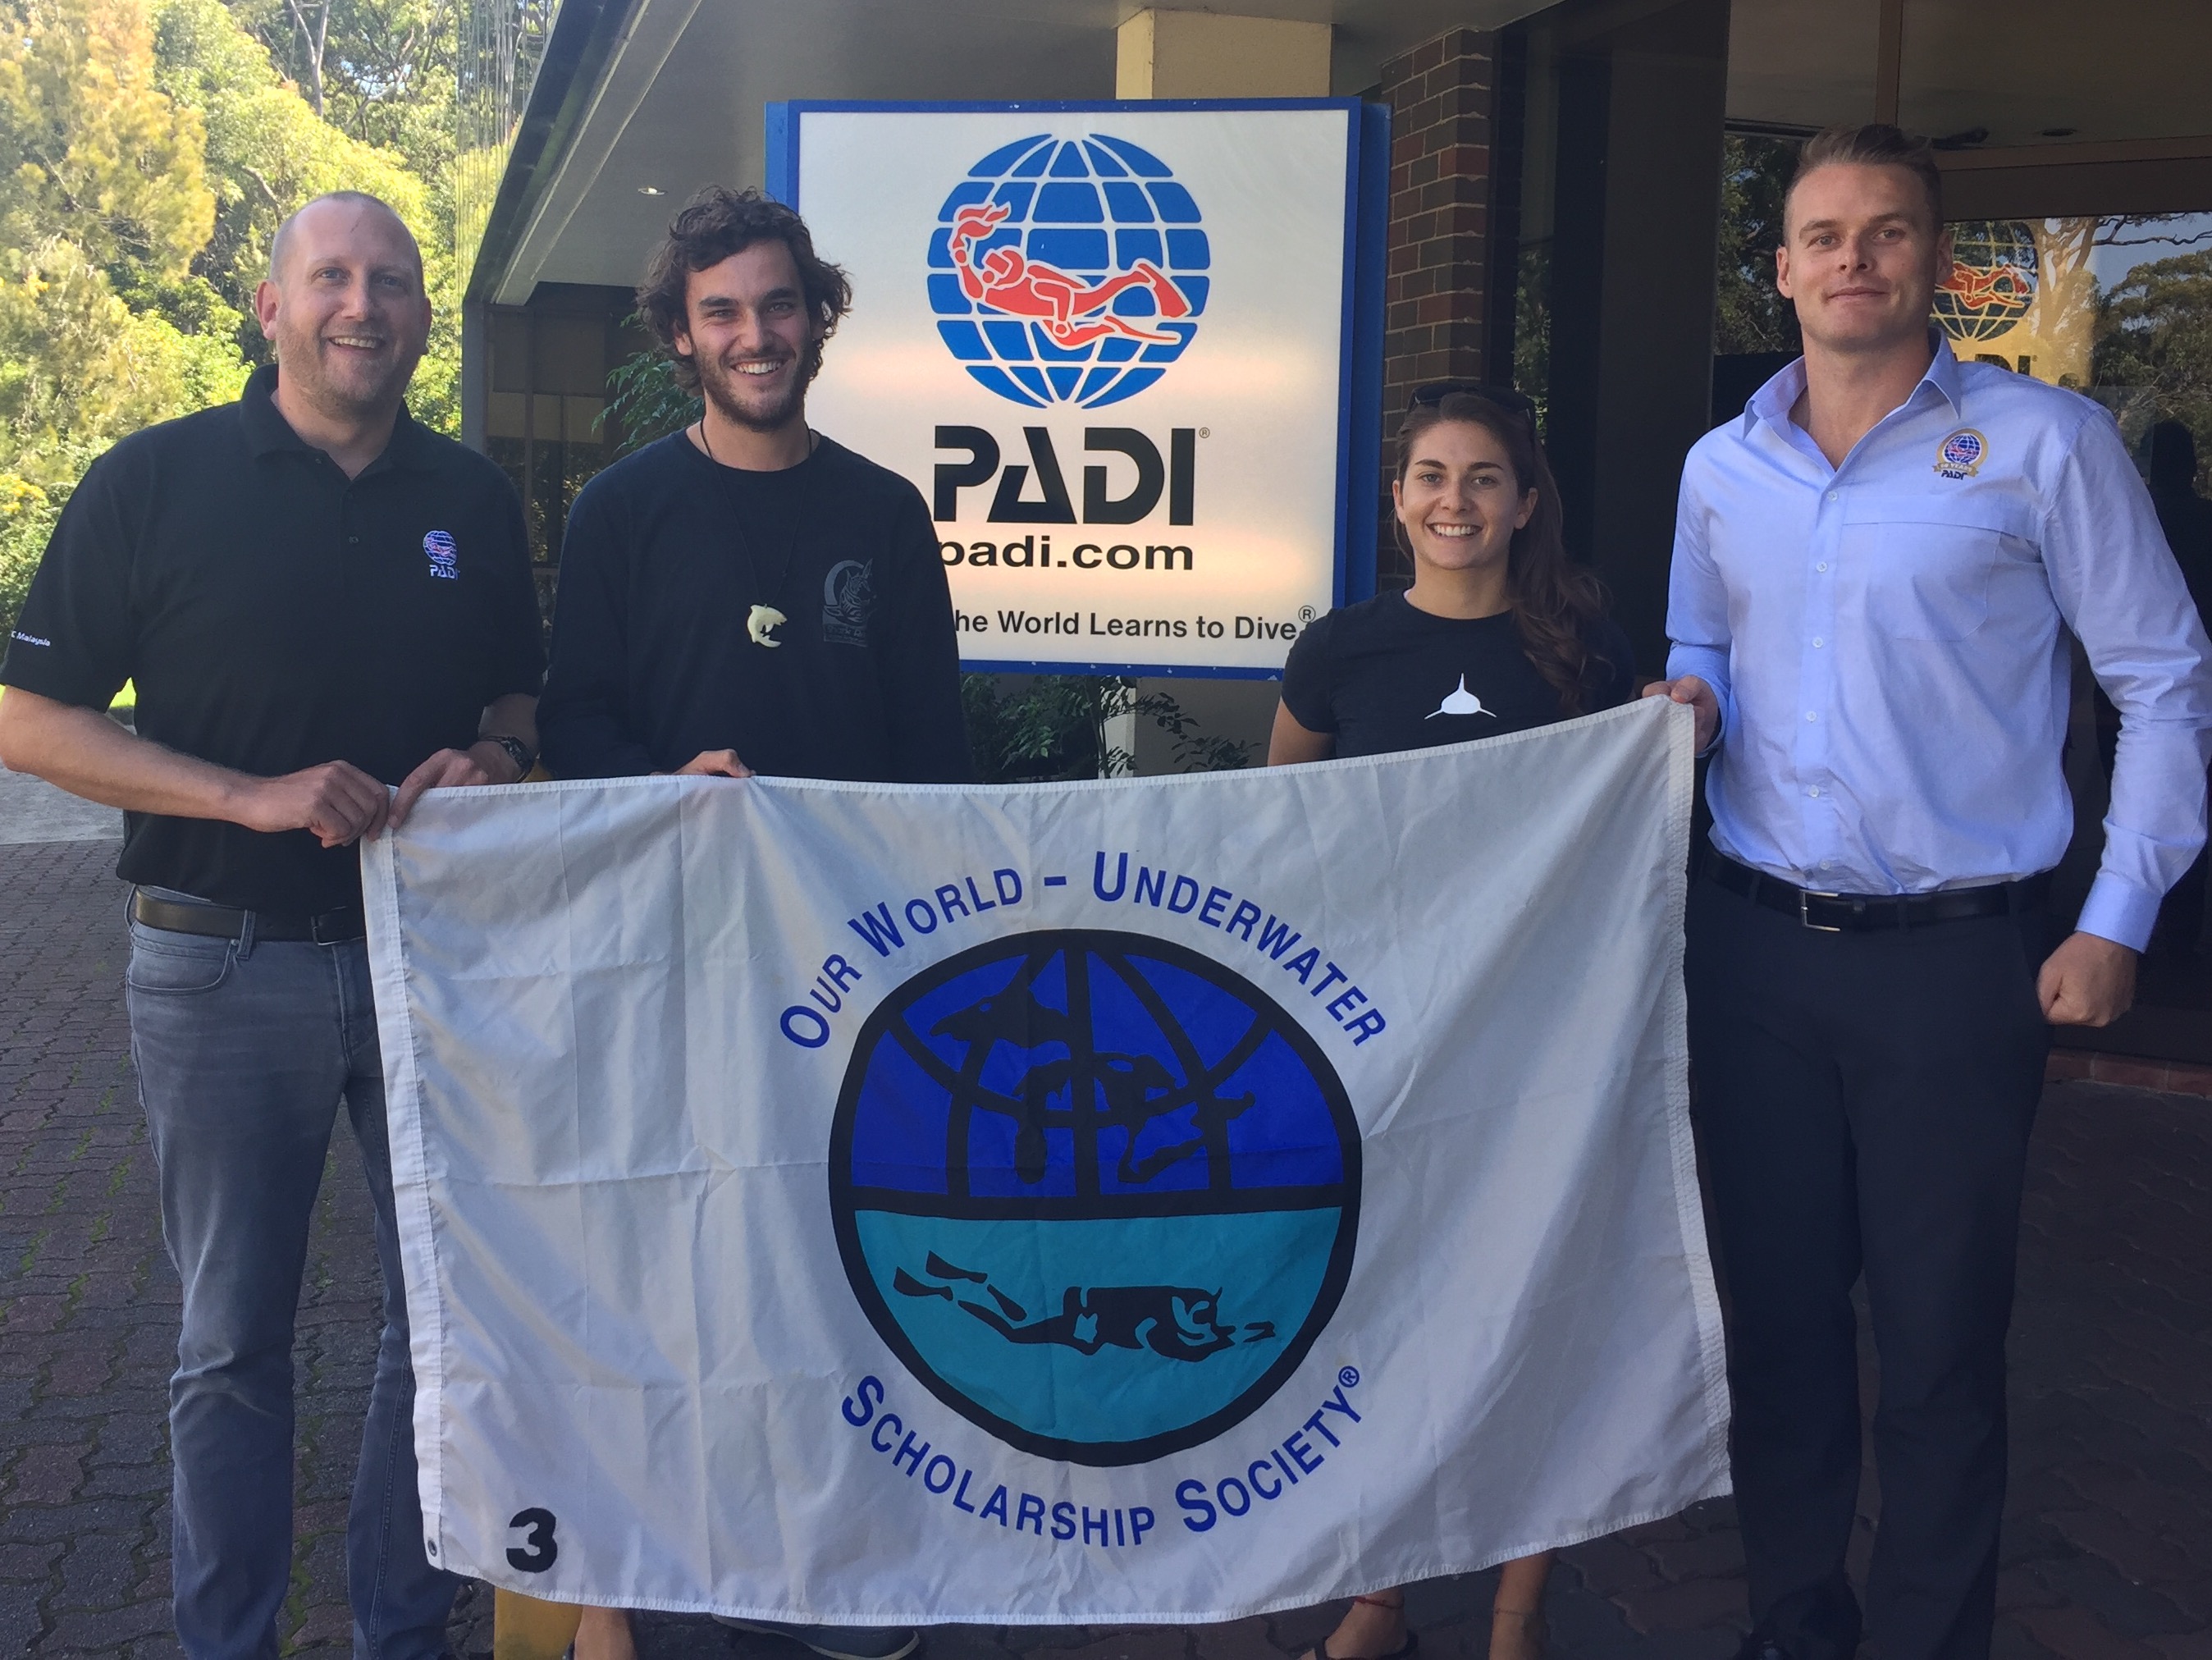 Meeting the PADI Team - Thomas Knedelik and Brandon Scott at PADI Asia Pacific Headquarters with 2015 AU Scholar Ben Buchan.